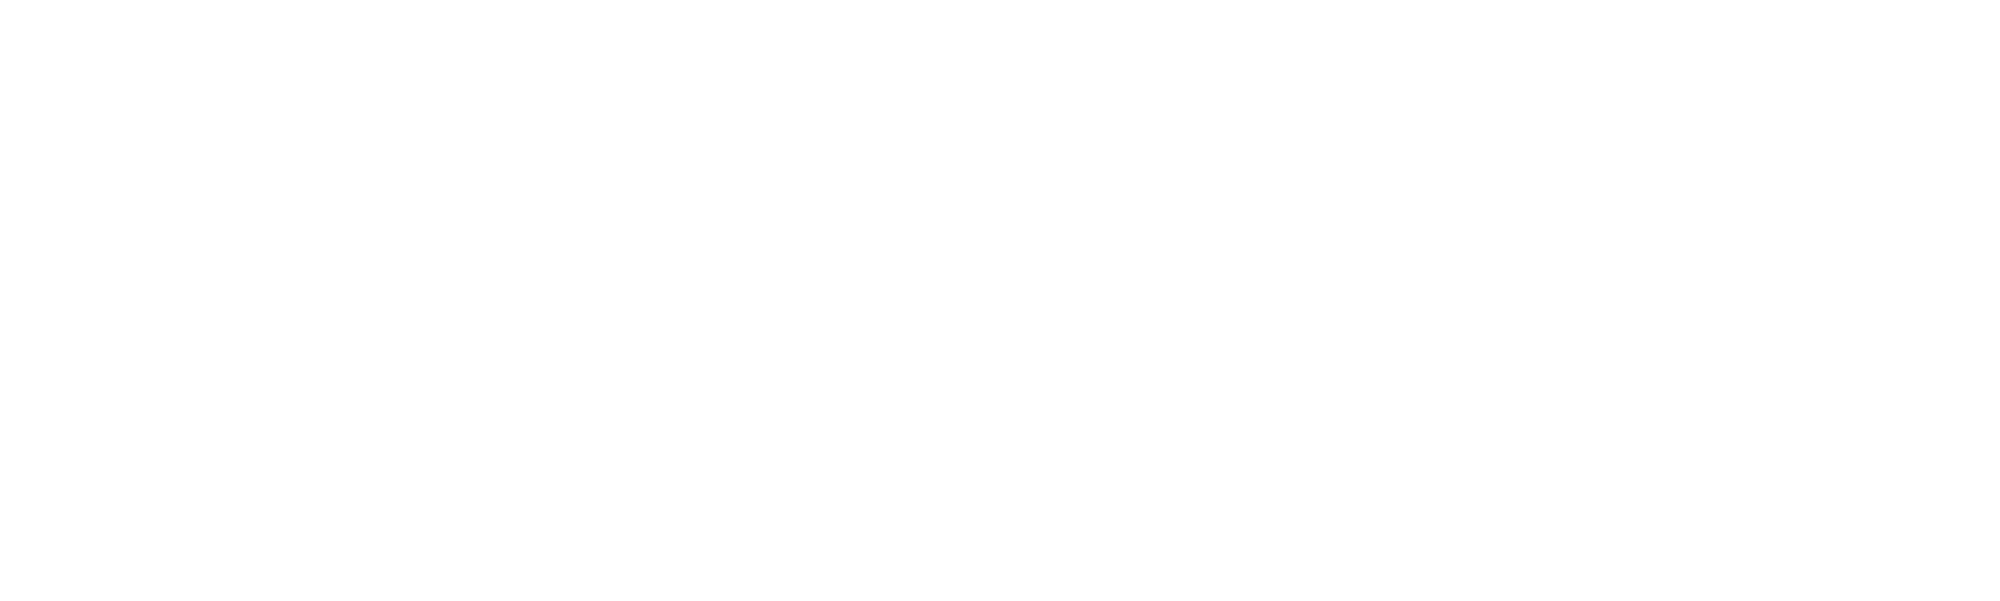 Joy Best Juicer